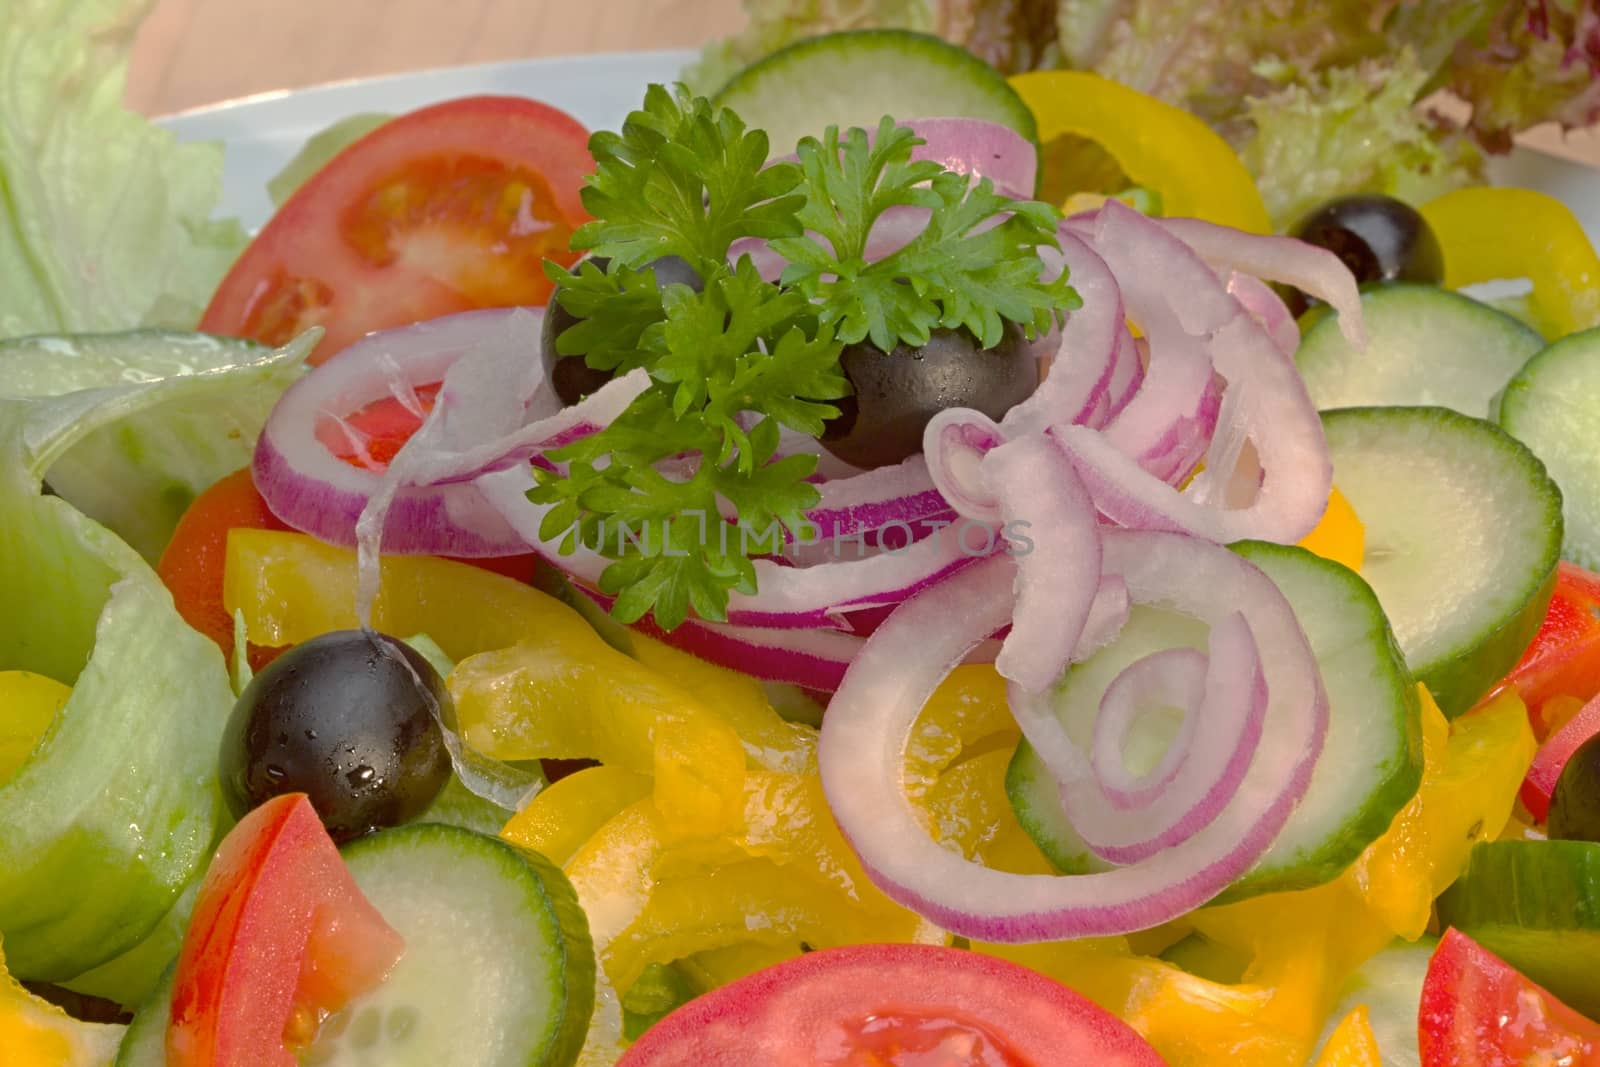 Photo shows details of various vegetable salad ingredients.